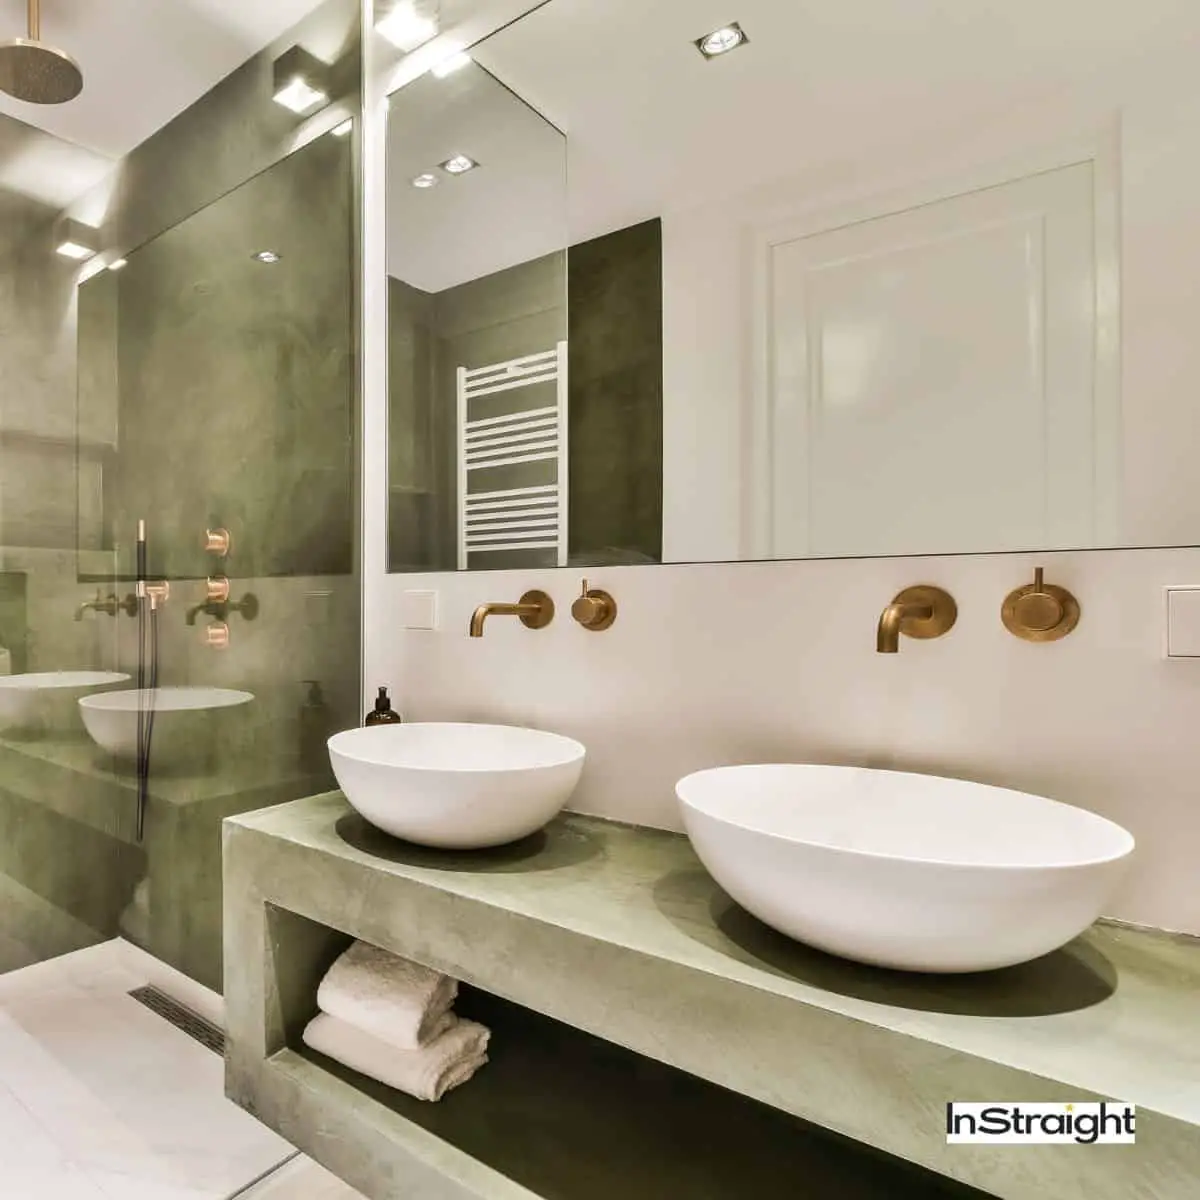 Bathroom mirror ideas for double vanity